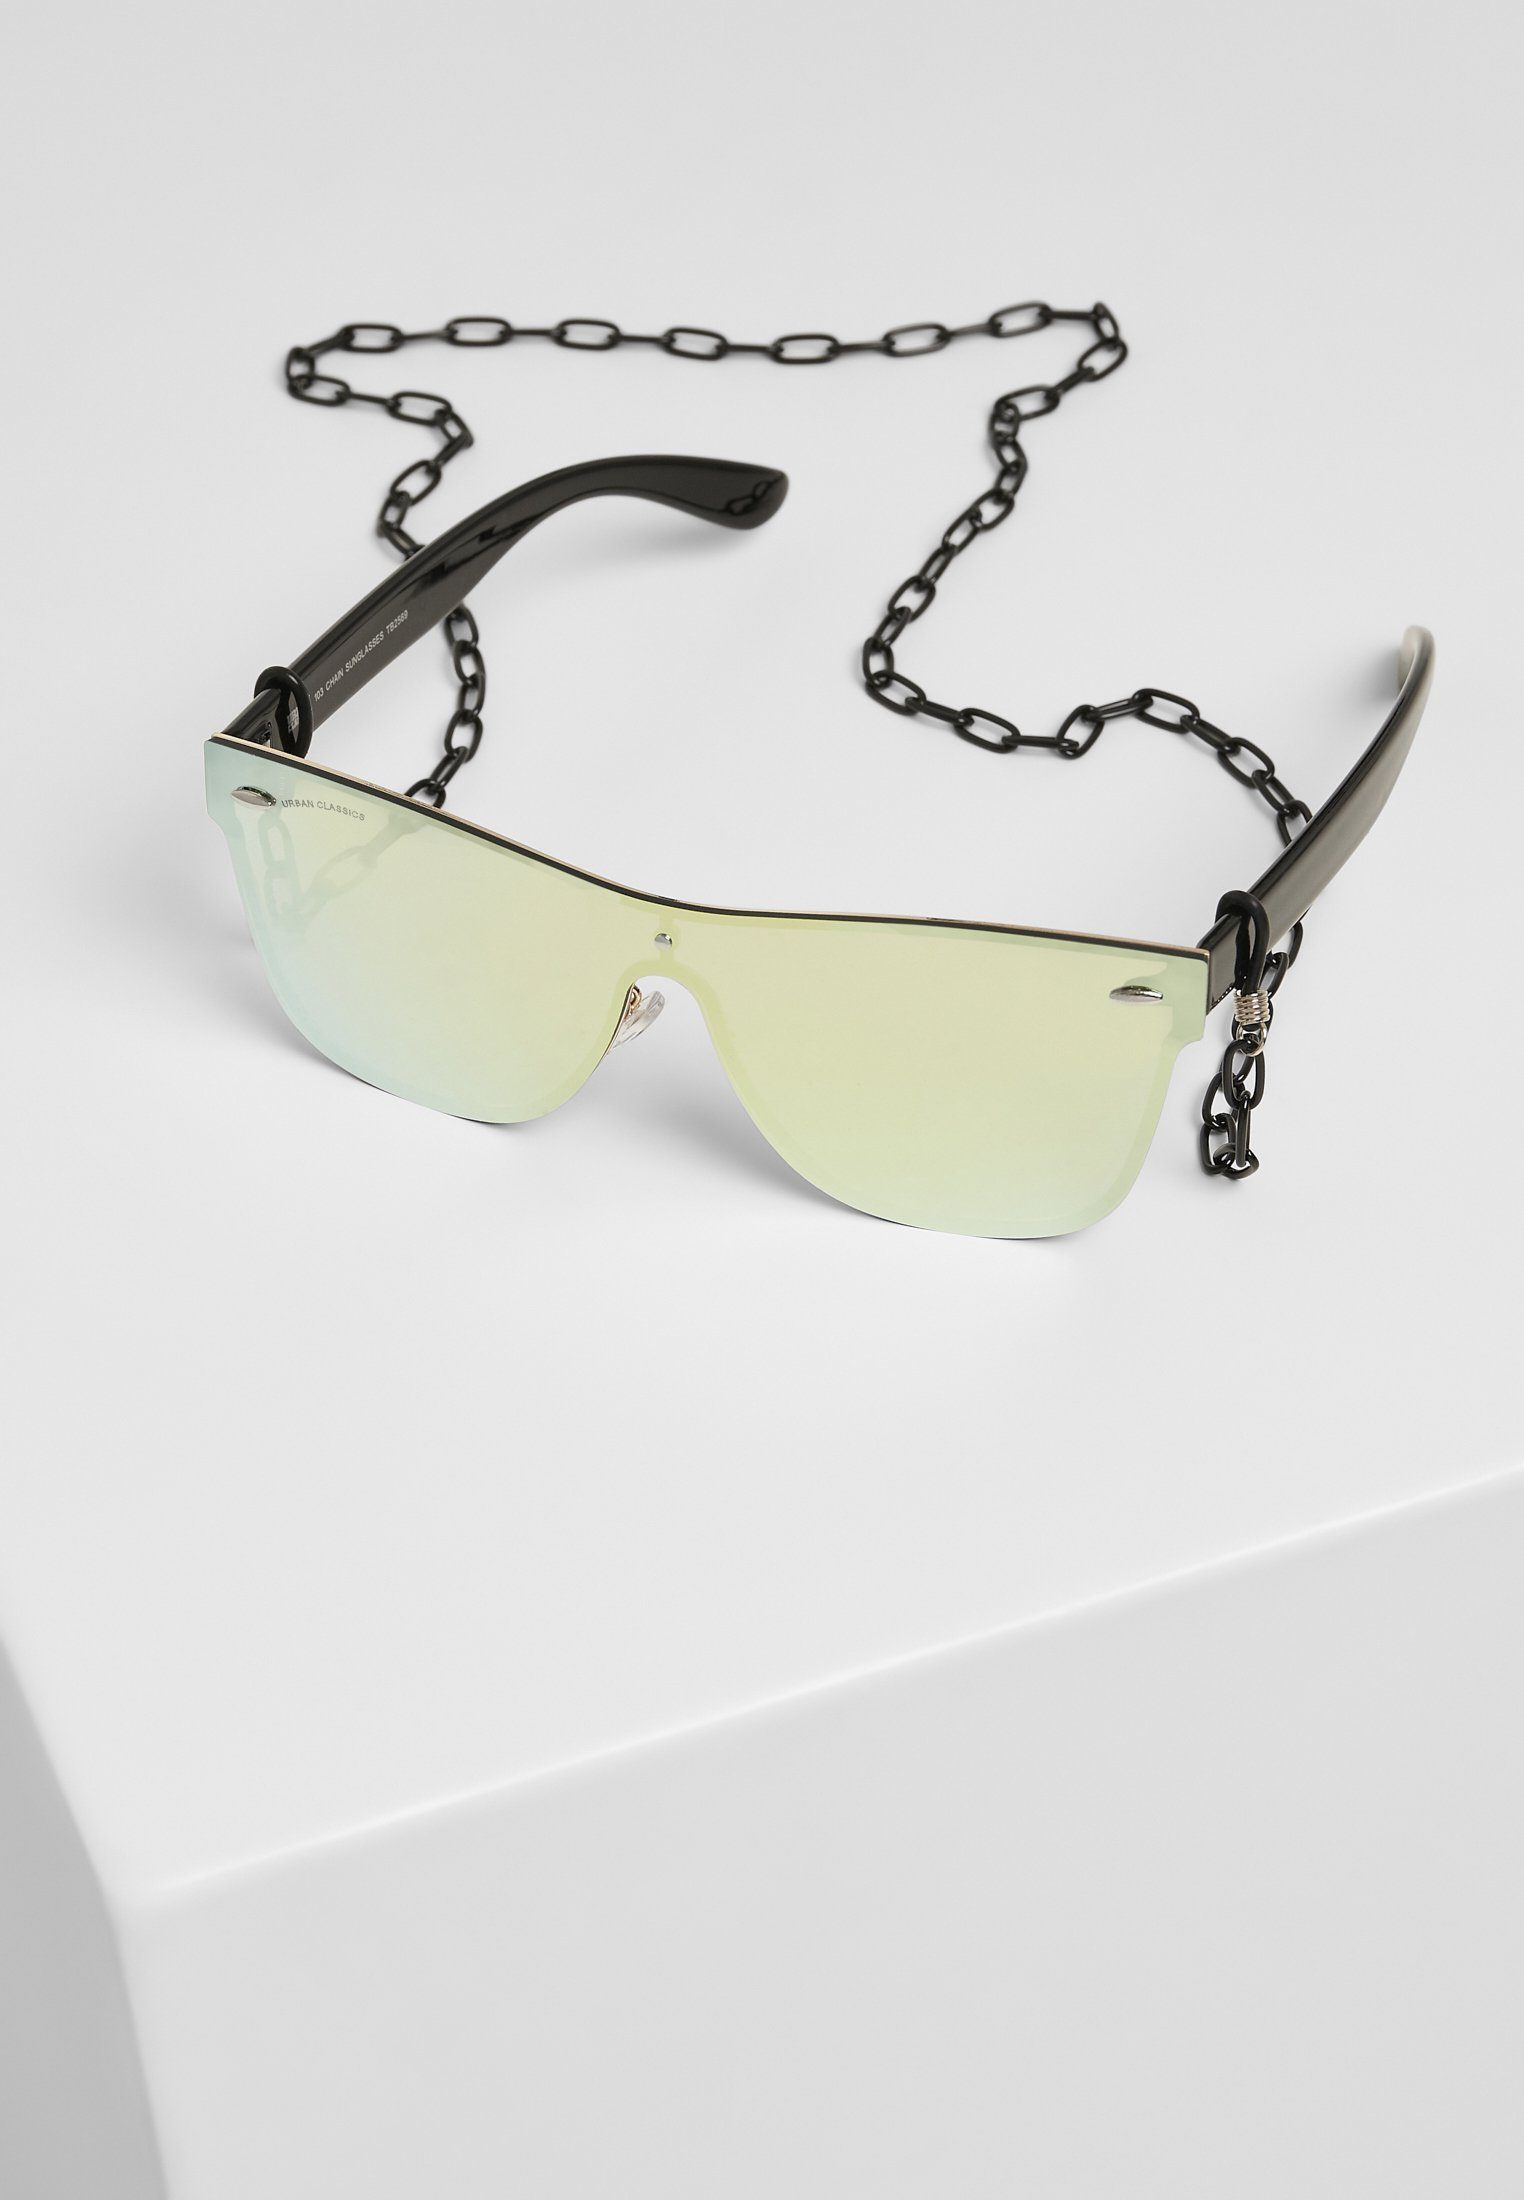 Chain Sonnenbrille Unisex 103 black/gold URBAN CLASSICS Sunglasses mirror